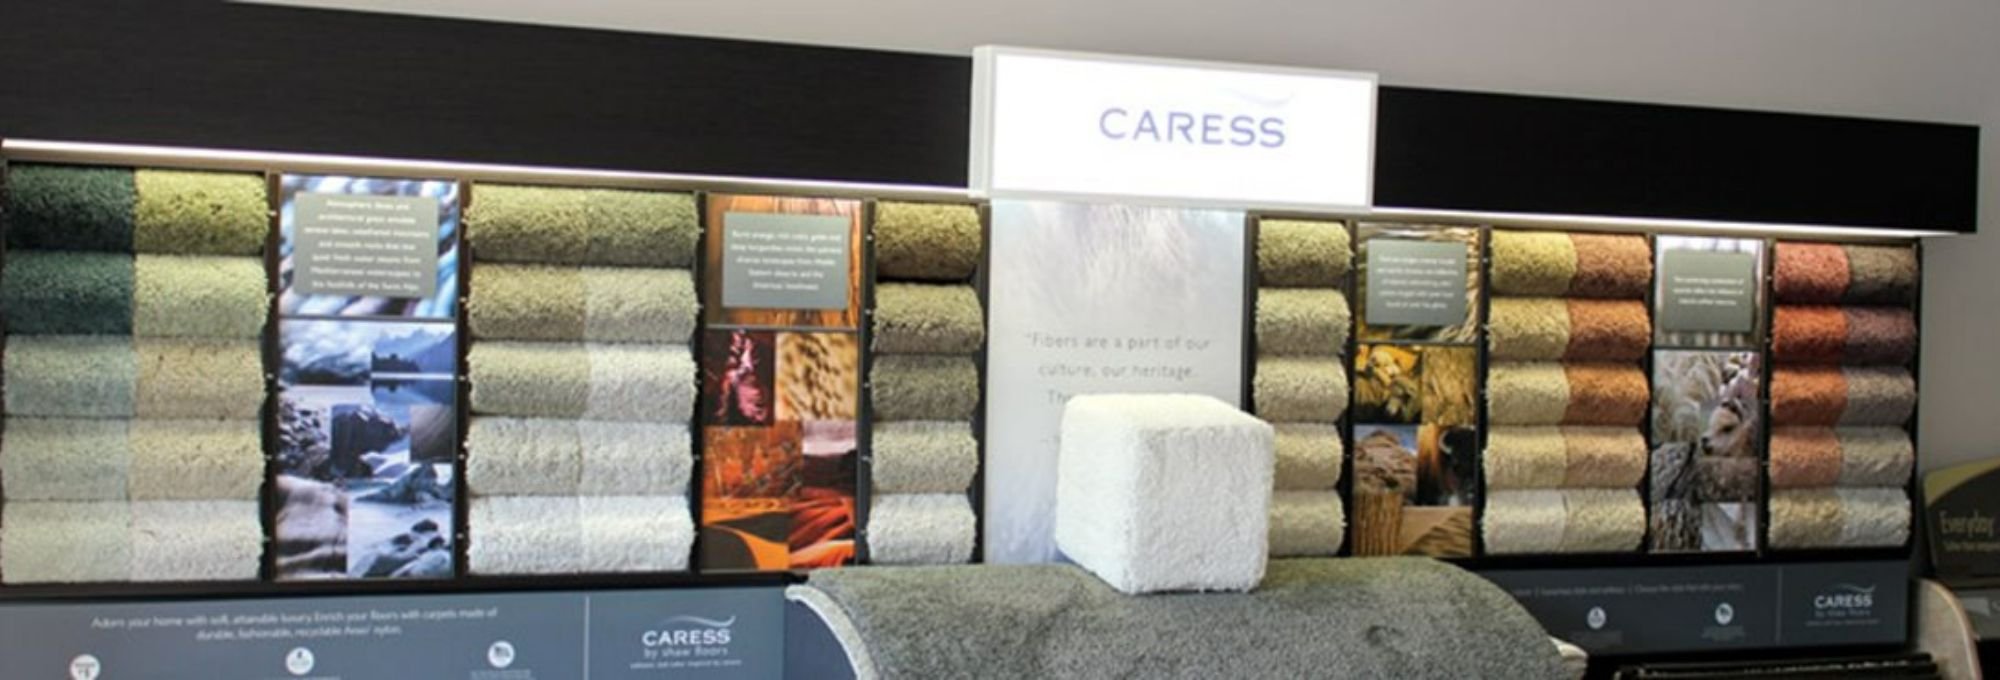 Caress samples Choo Choo Carpets & Floor Coverings, Inc in Lane Chattanooga, TN